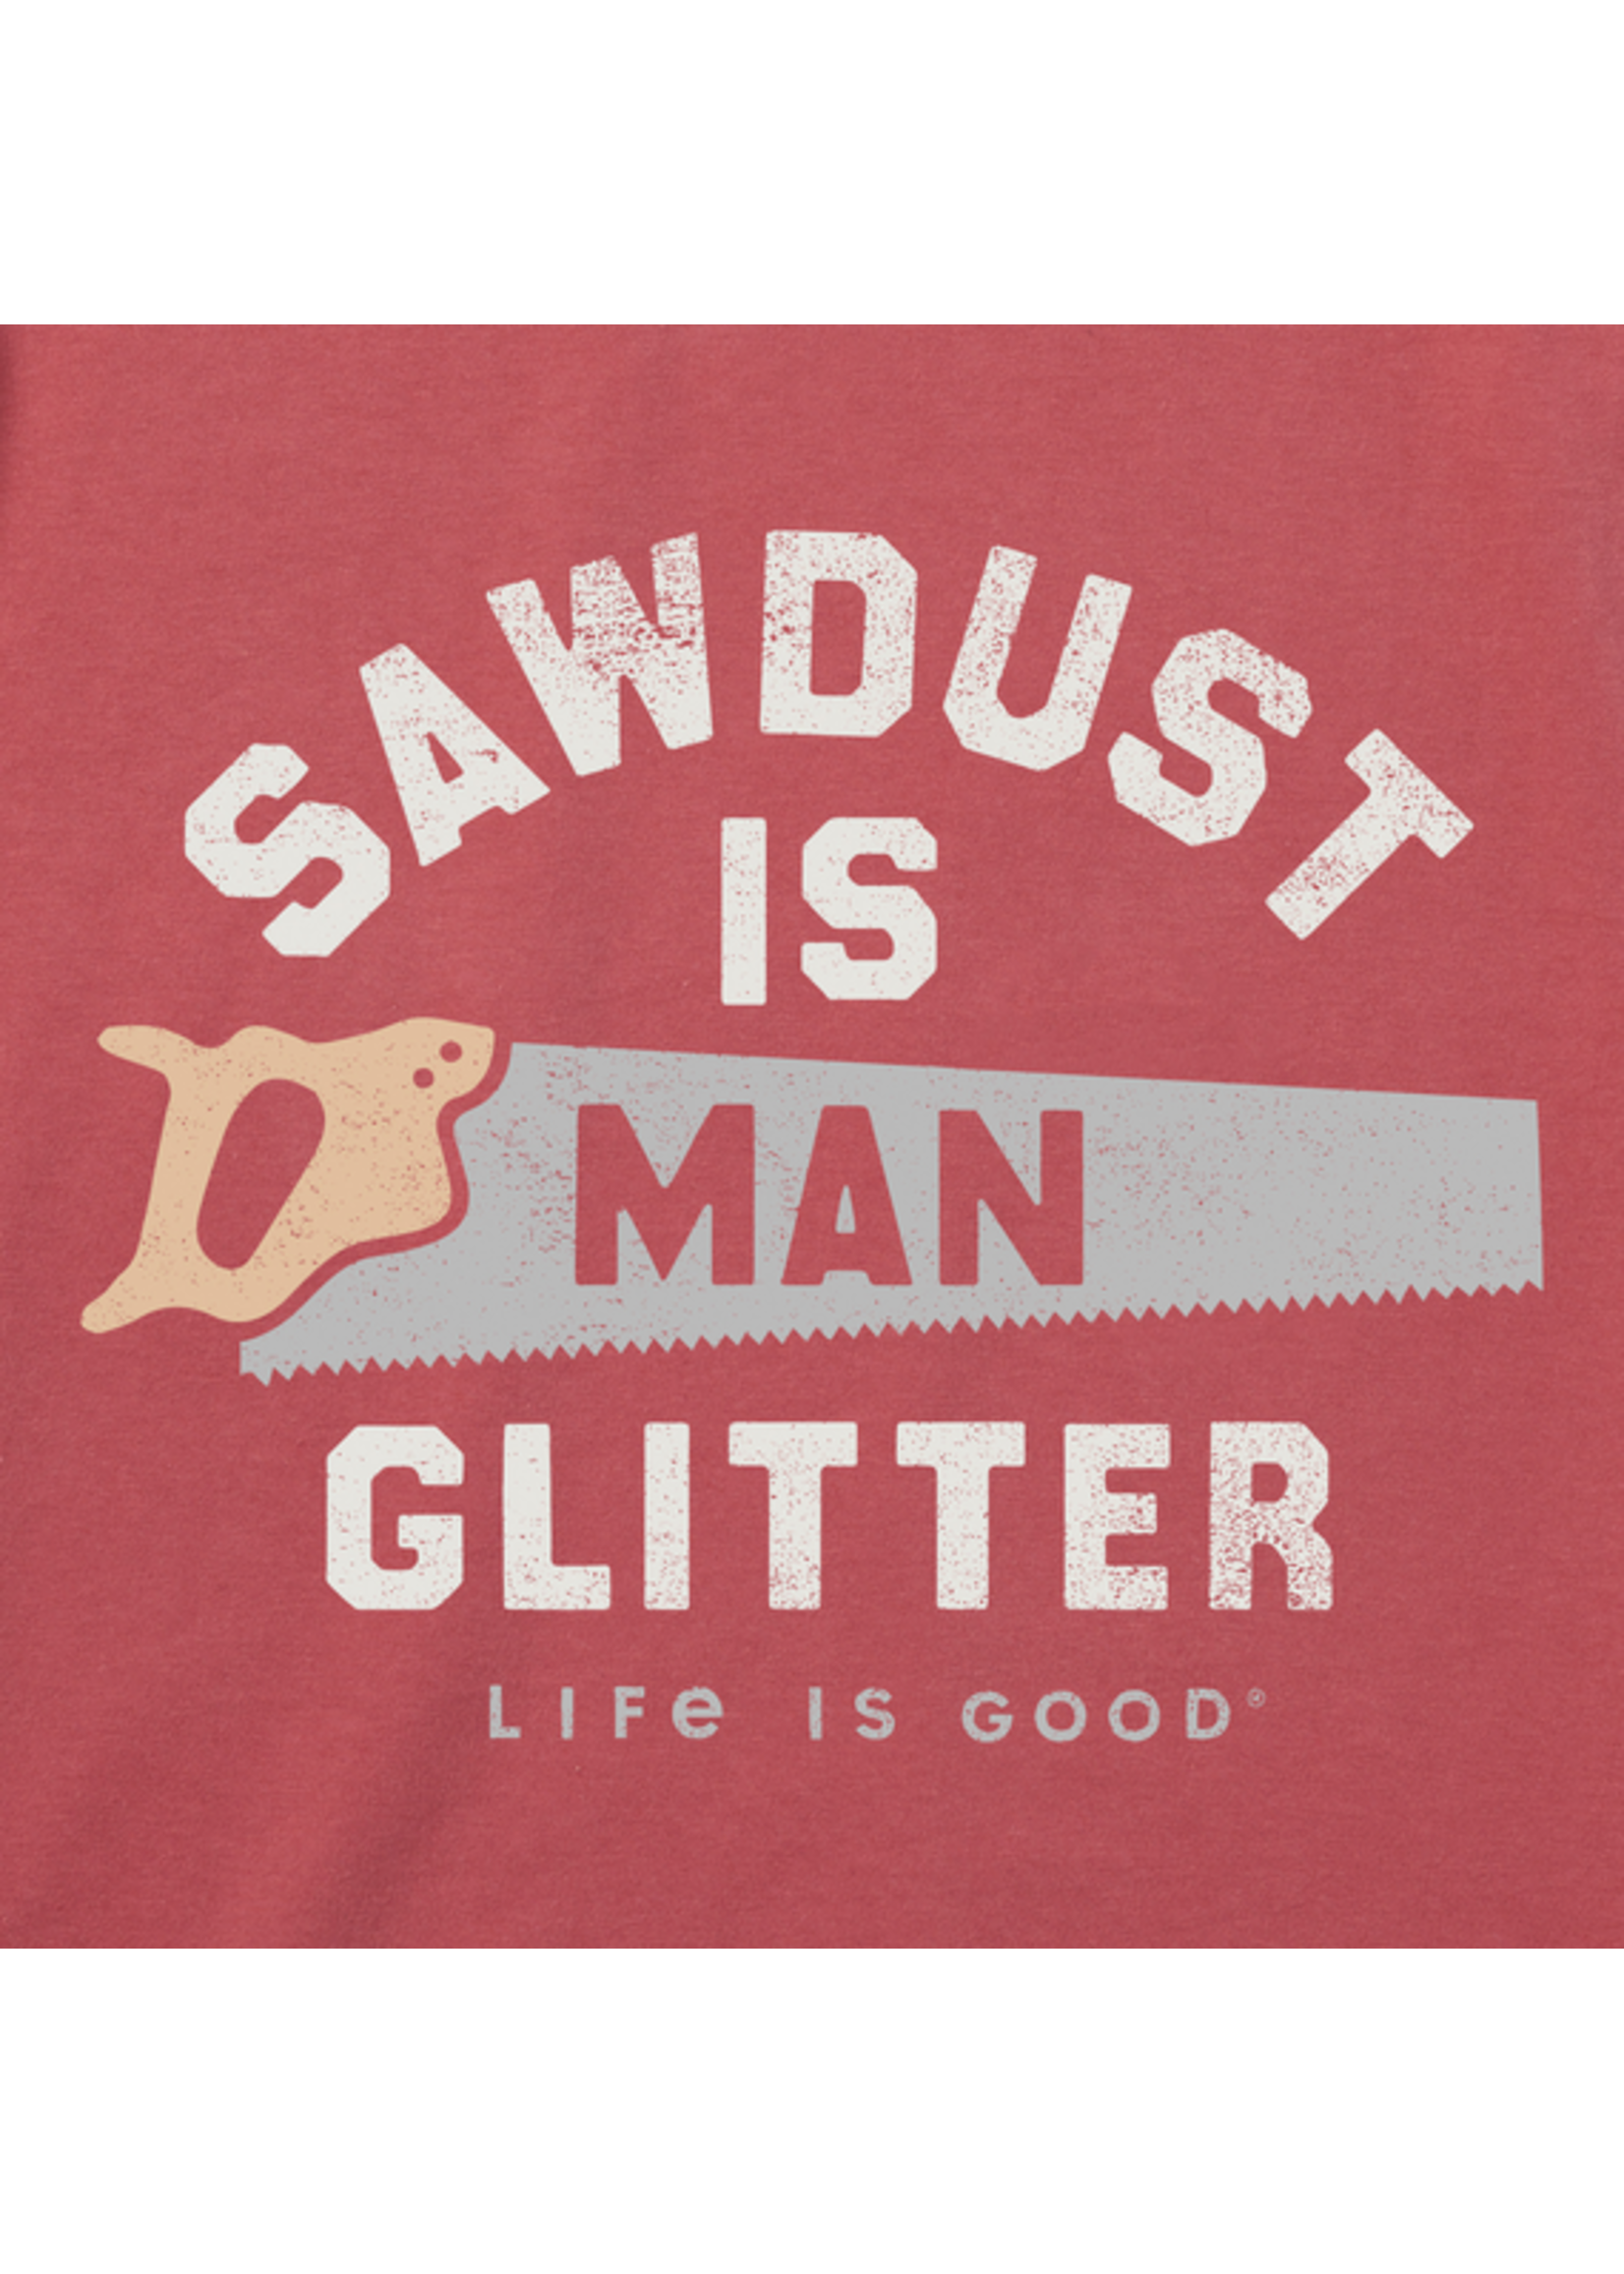 Life Is Good Life Is Good M's Sawdust is Man Glitter Saw Short Sleeve Tee